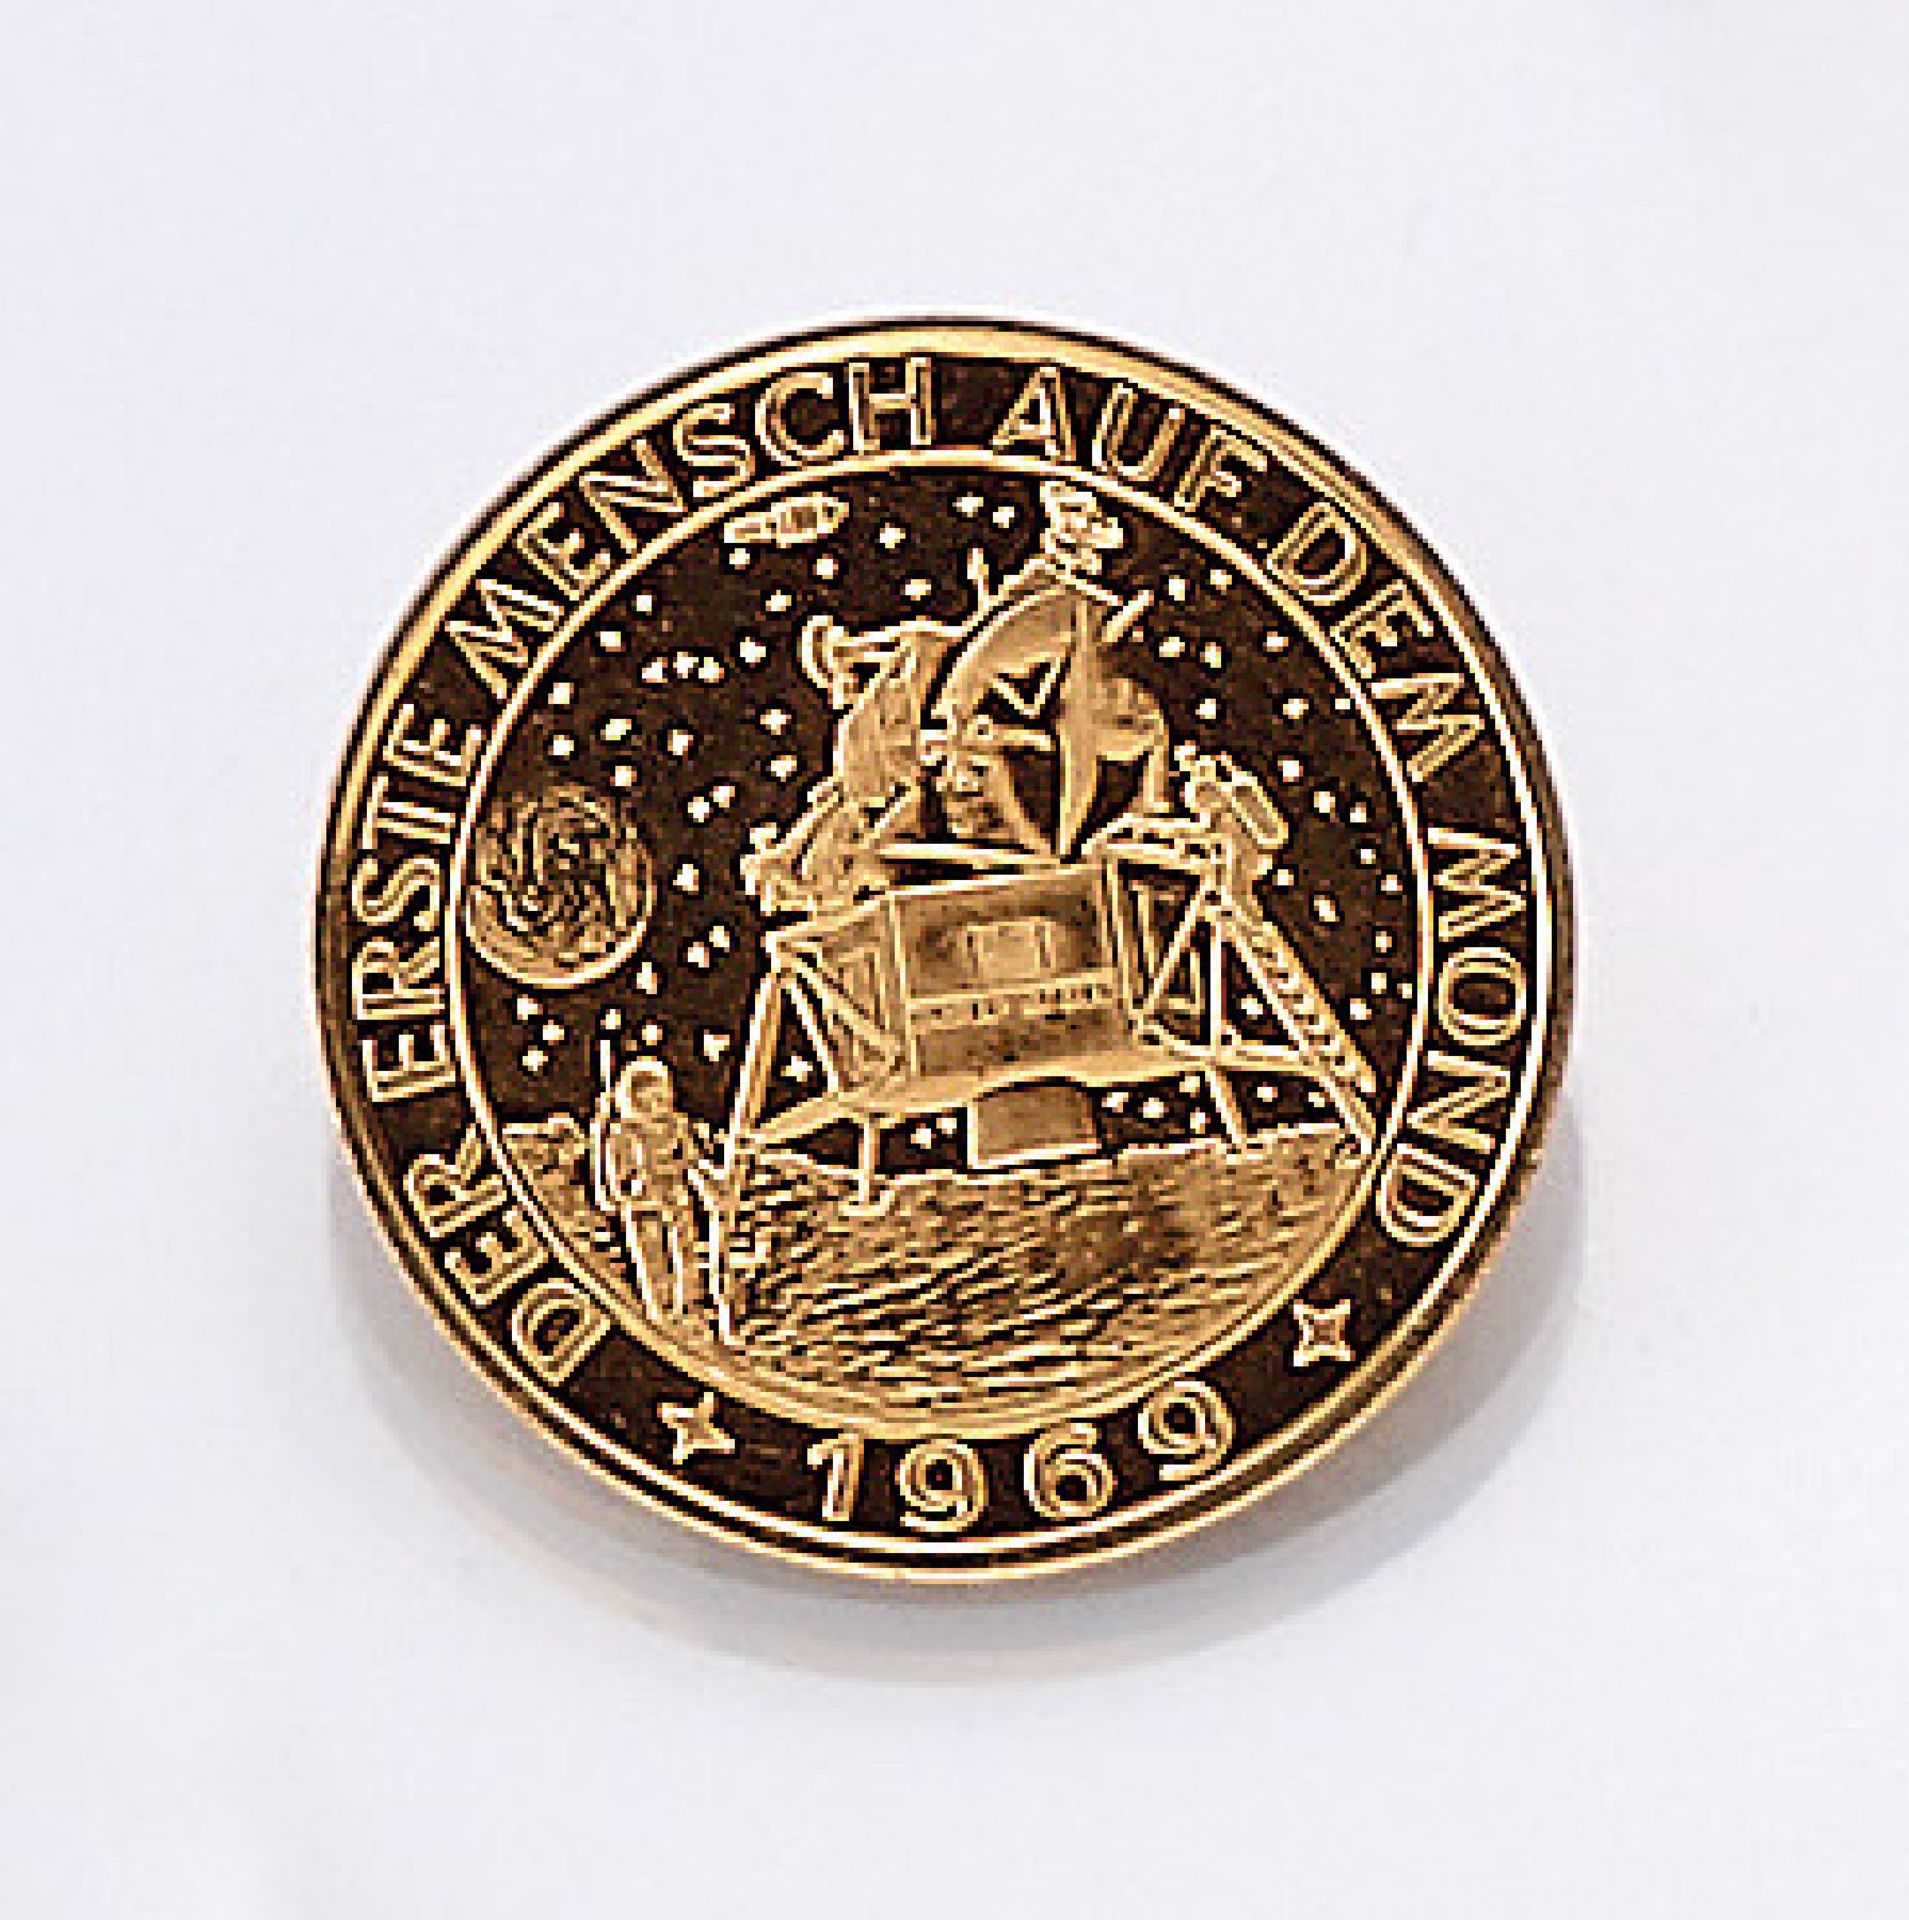 Goldmedaille, Der erste Mensch auf dem Mond, 1969, 900/1000, ca. 3.5 g, D. ca. 19.6 mm